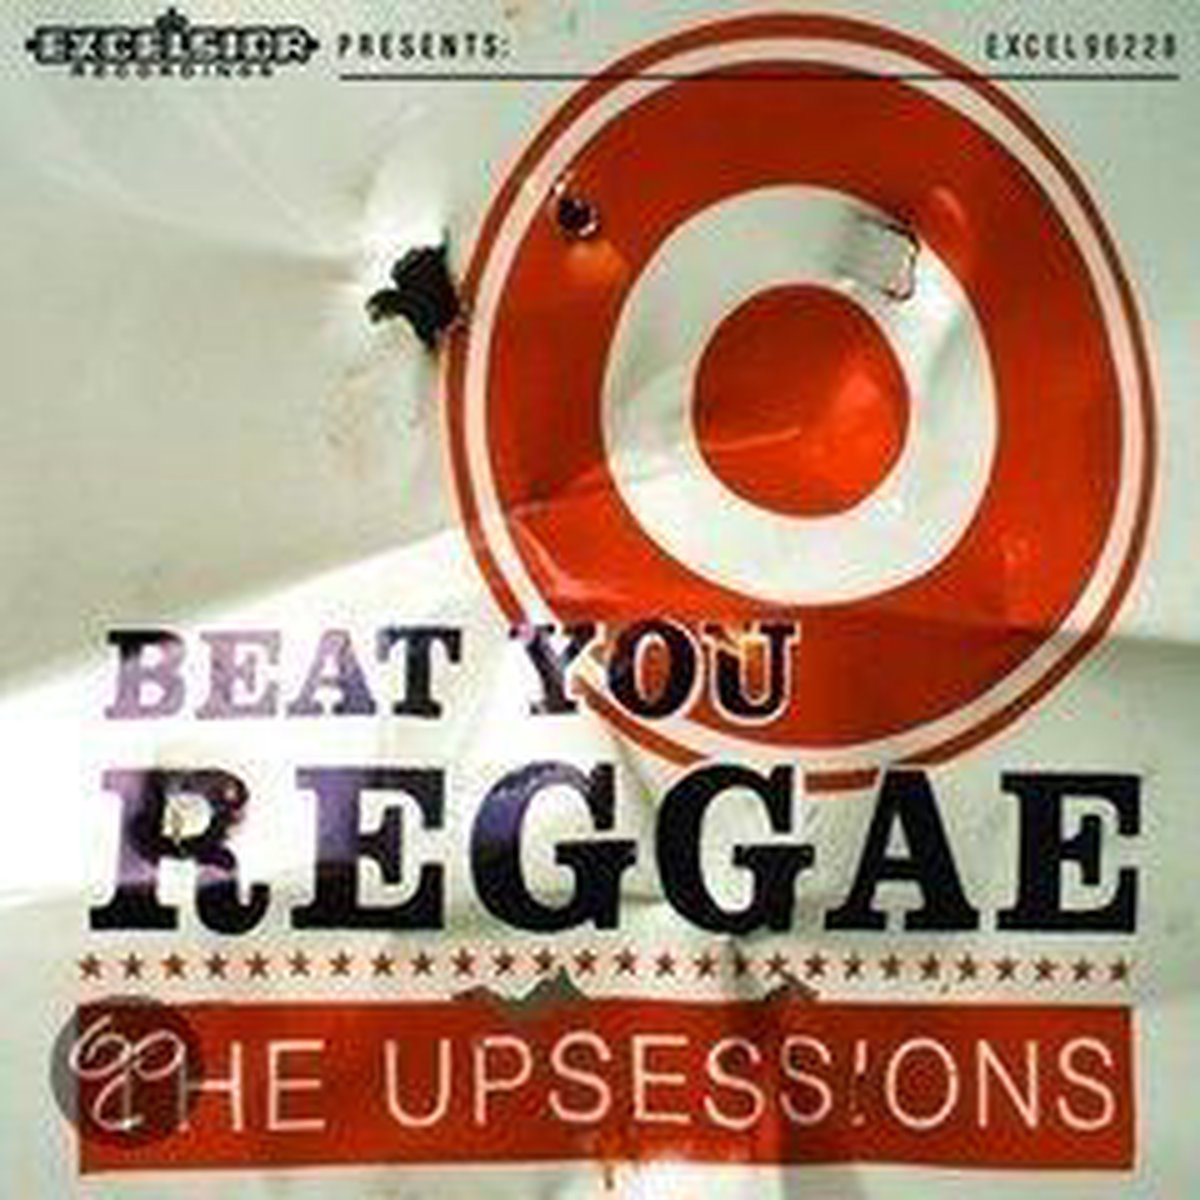 Beat You Reggae - Upsessions